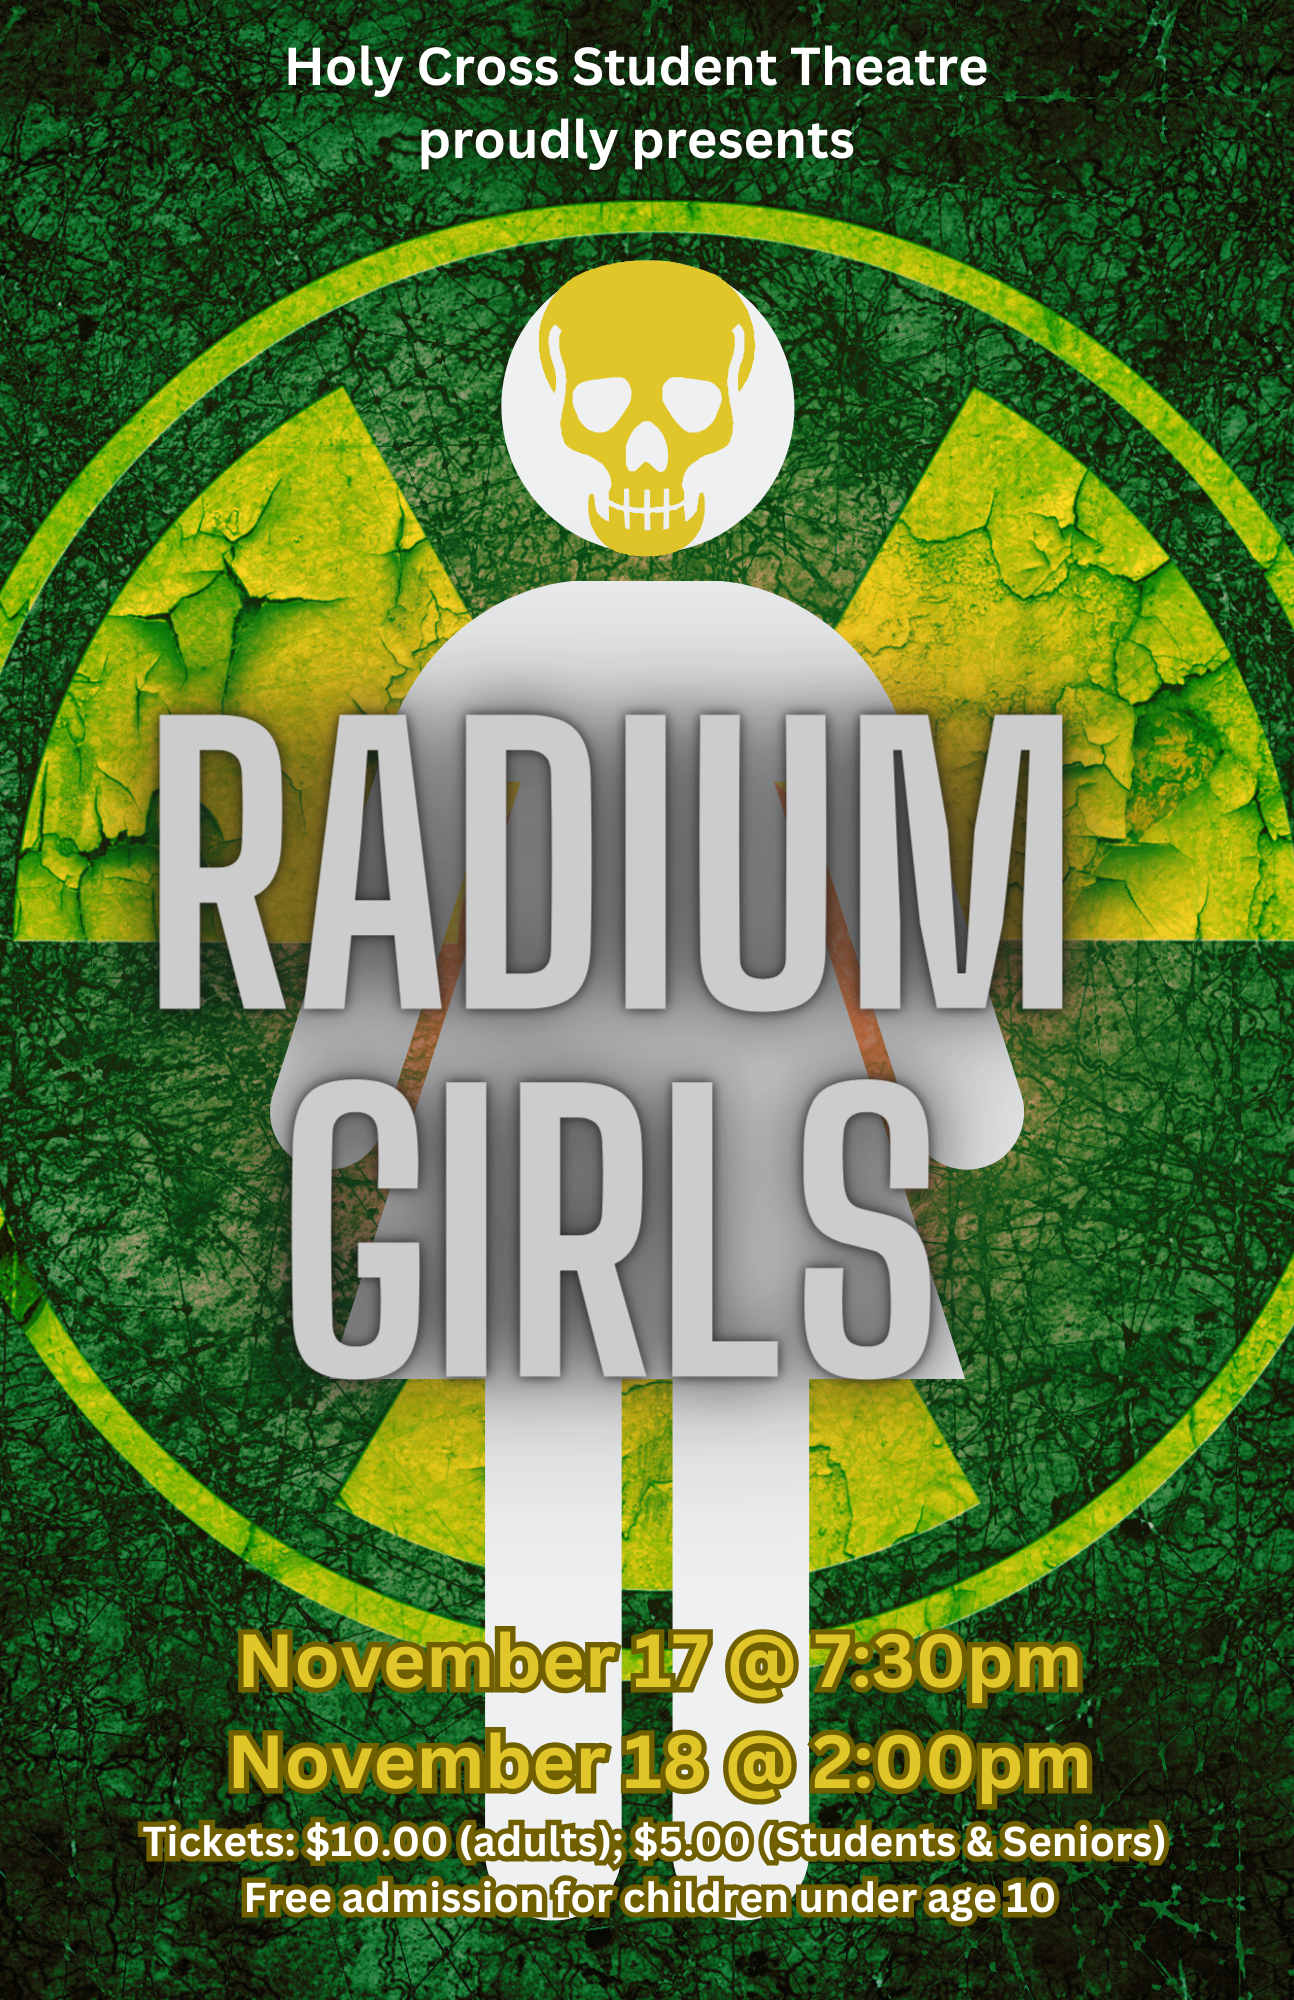 Holy Cross Student Theatre to present Radium Girls